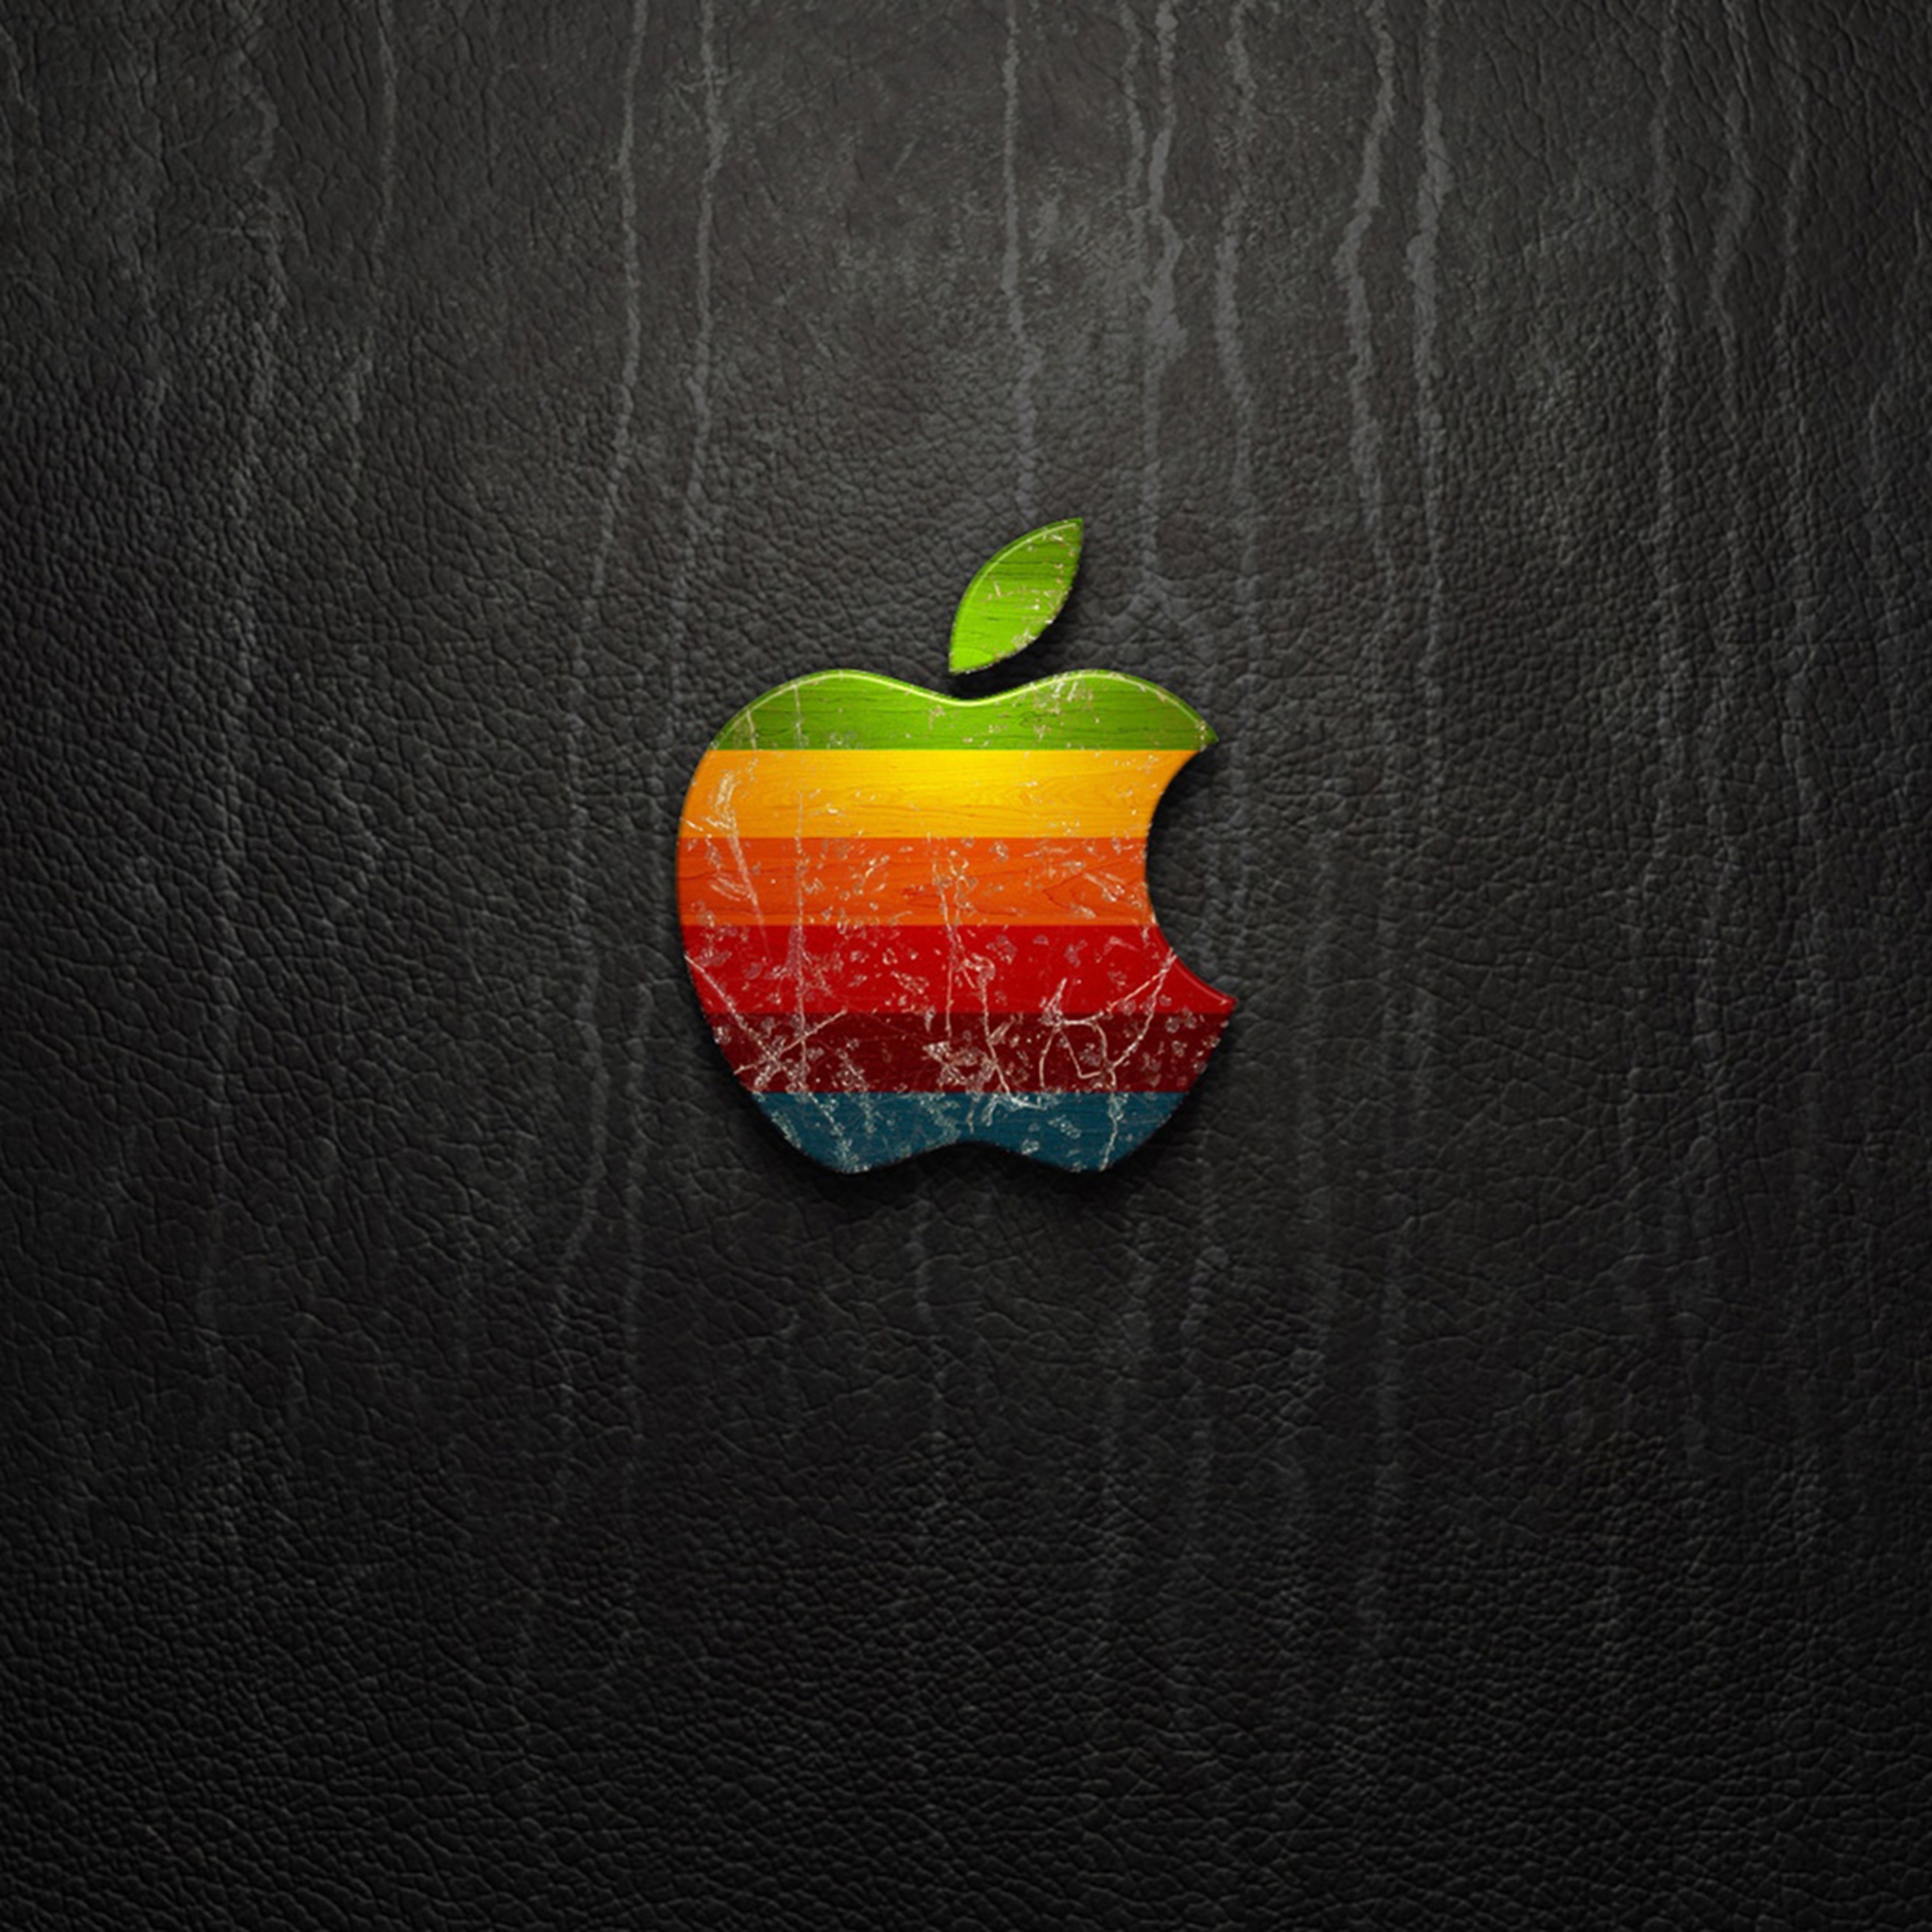 iPad Wallpapers Apple Leather Ipad Wallpaper 3208x3208 px